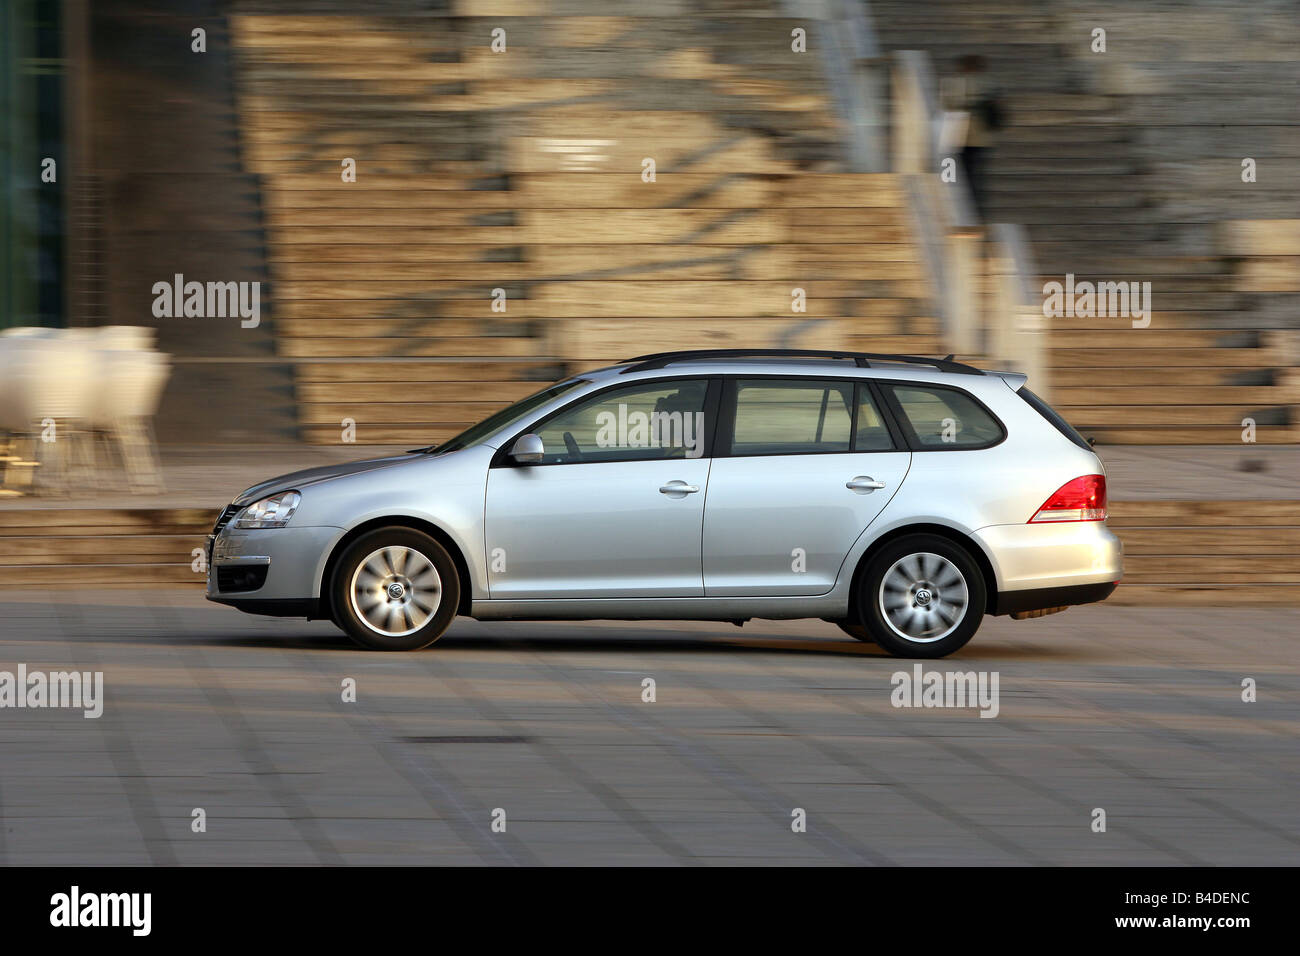 VW Volkswagen Golf Variant 1.9 TDI Trendline, model year 2007-, silver,  driving, side view, City Stock Photo - Alamy